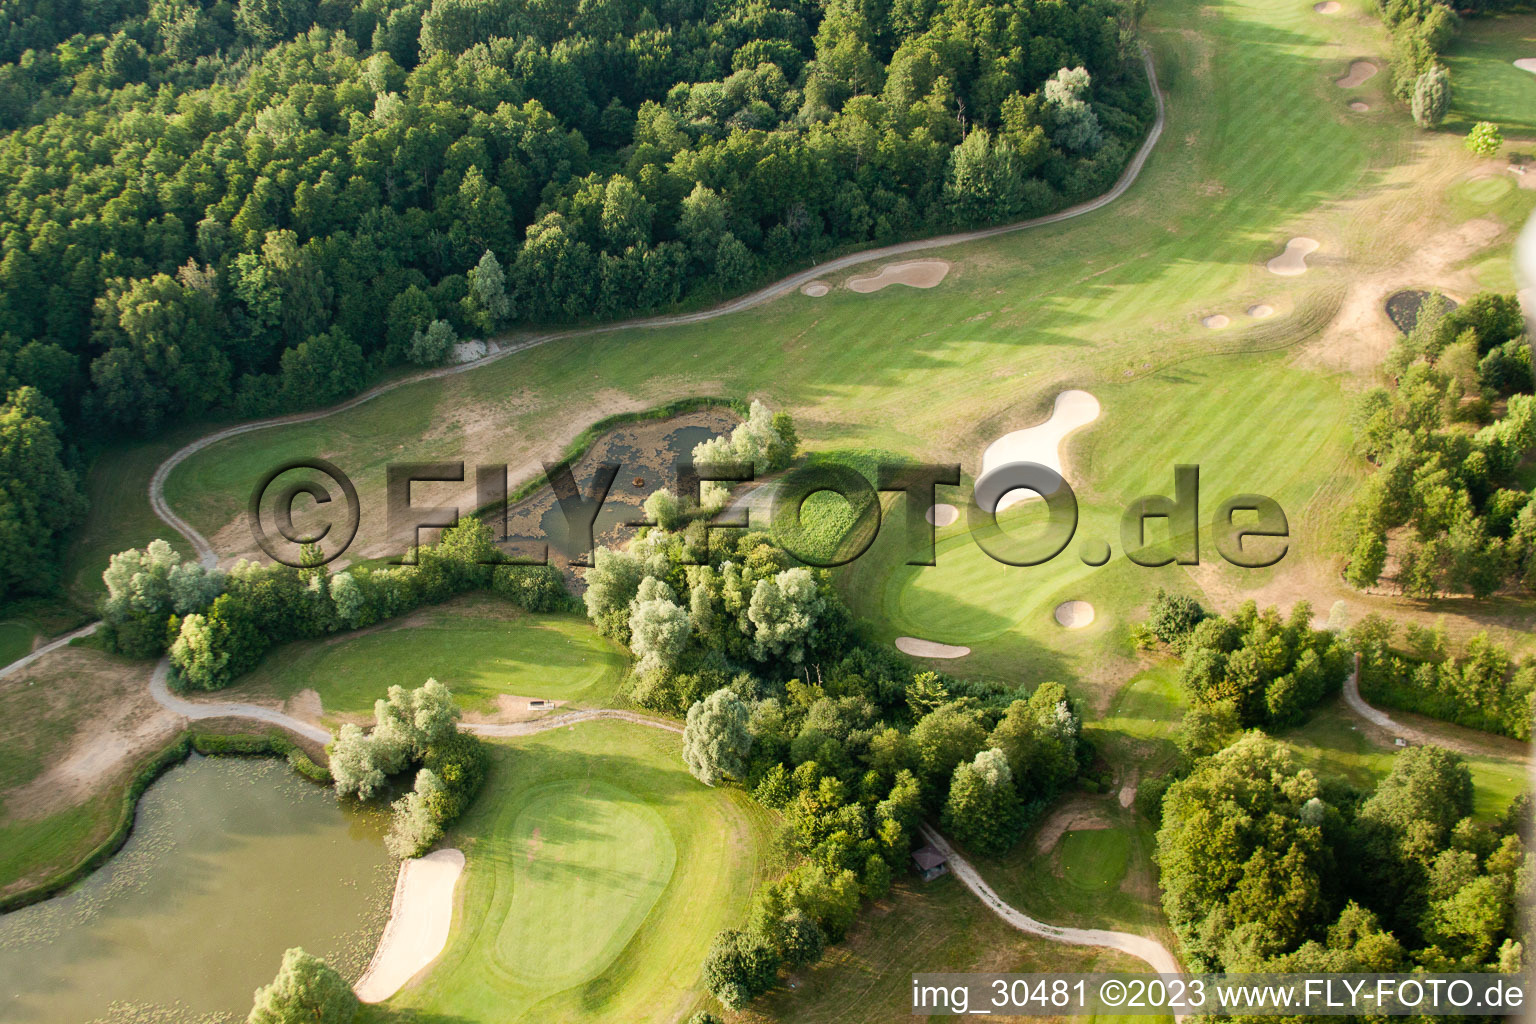 Golf club Soufflenheim Baden-Baden in Soufflenheim in the state Bas-Rhin, France viewn from the air